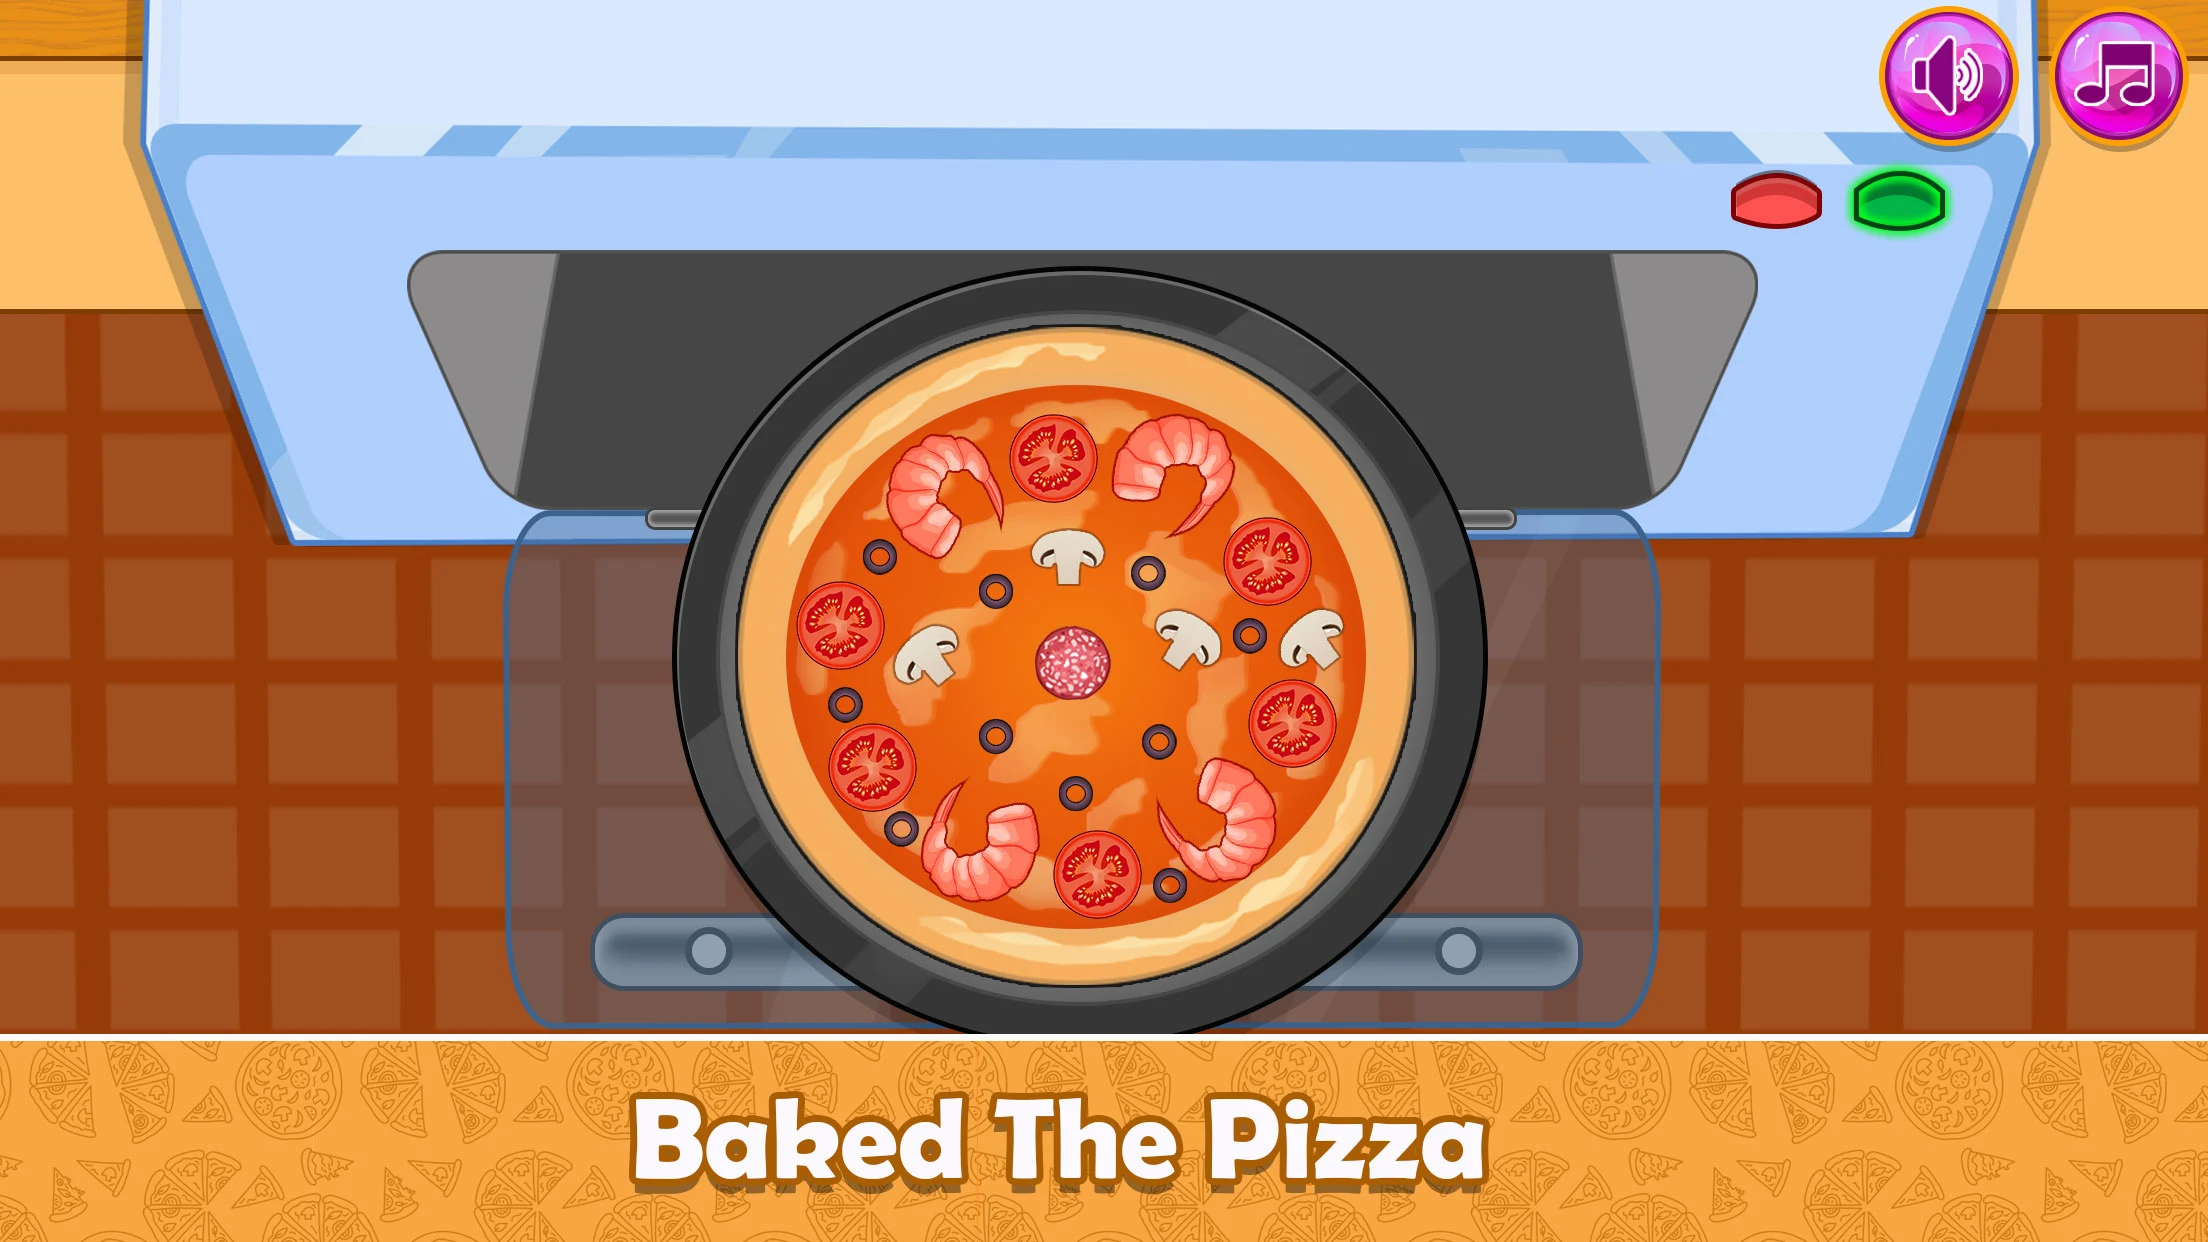 Pizza Games: Pizza Maker